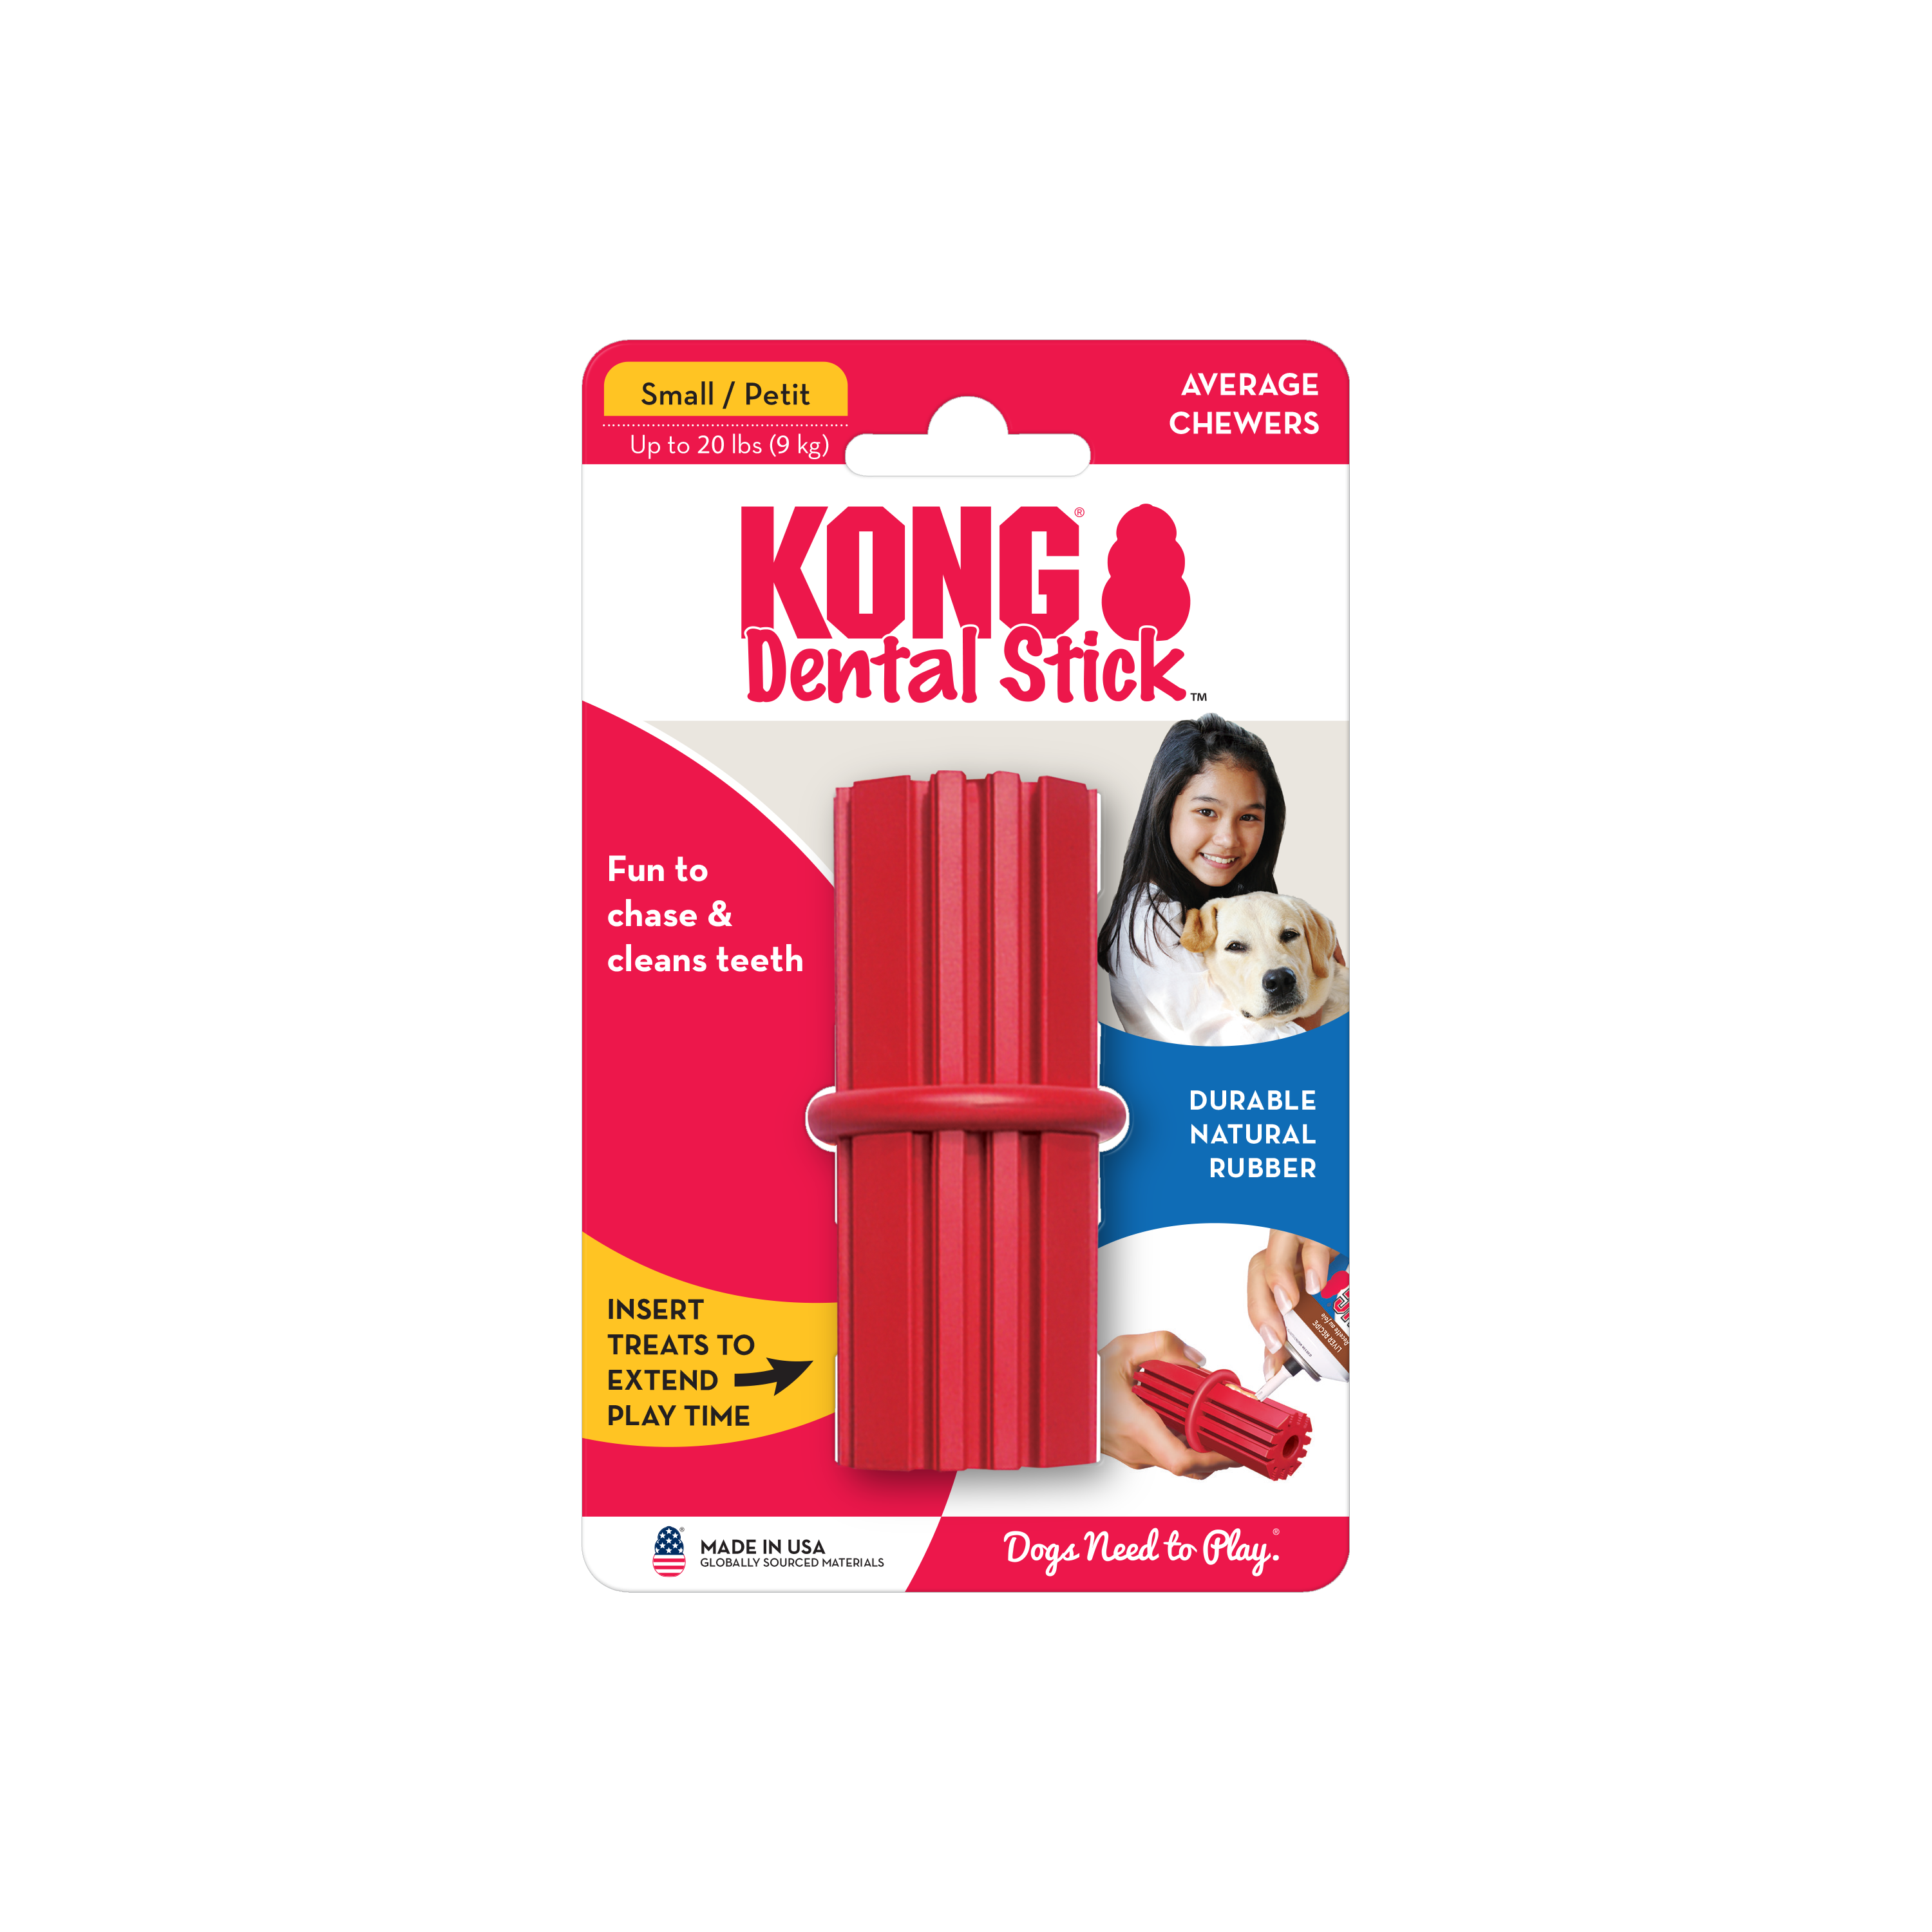 KONG Dental Stick onpack product image